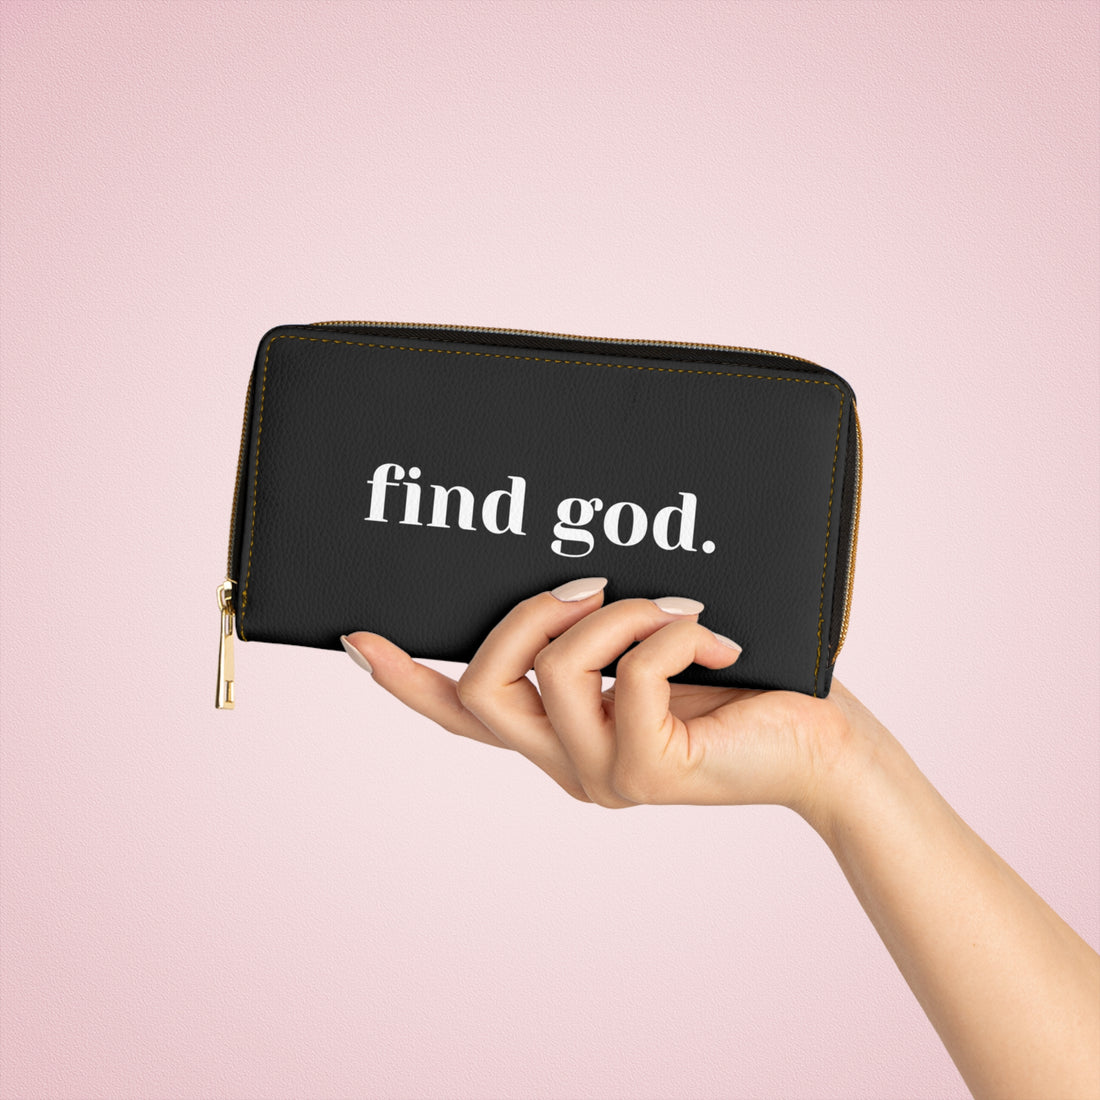 Find God. Zipper Wallet